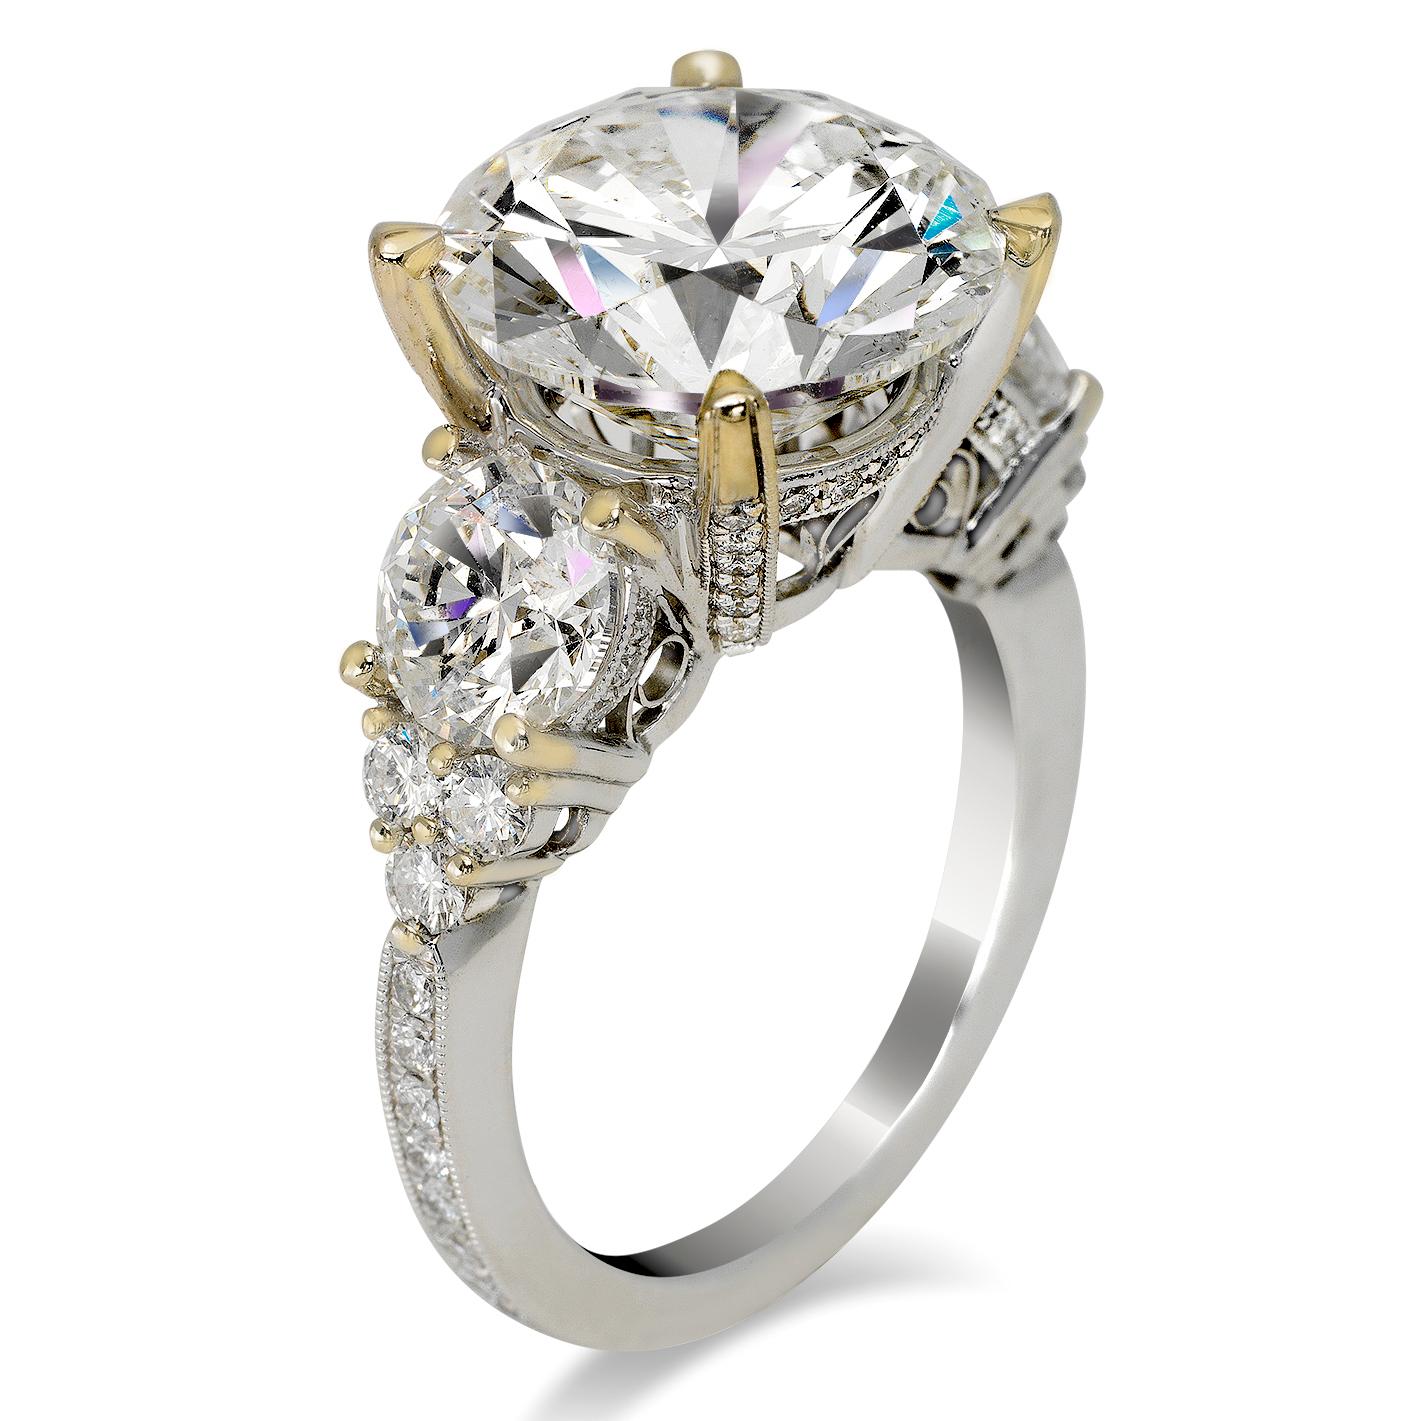 10ct diamond ring